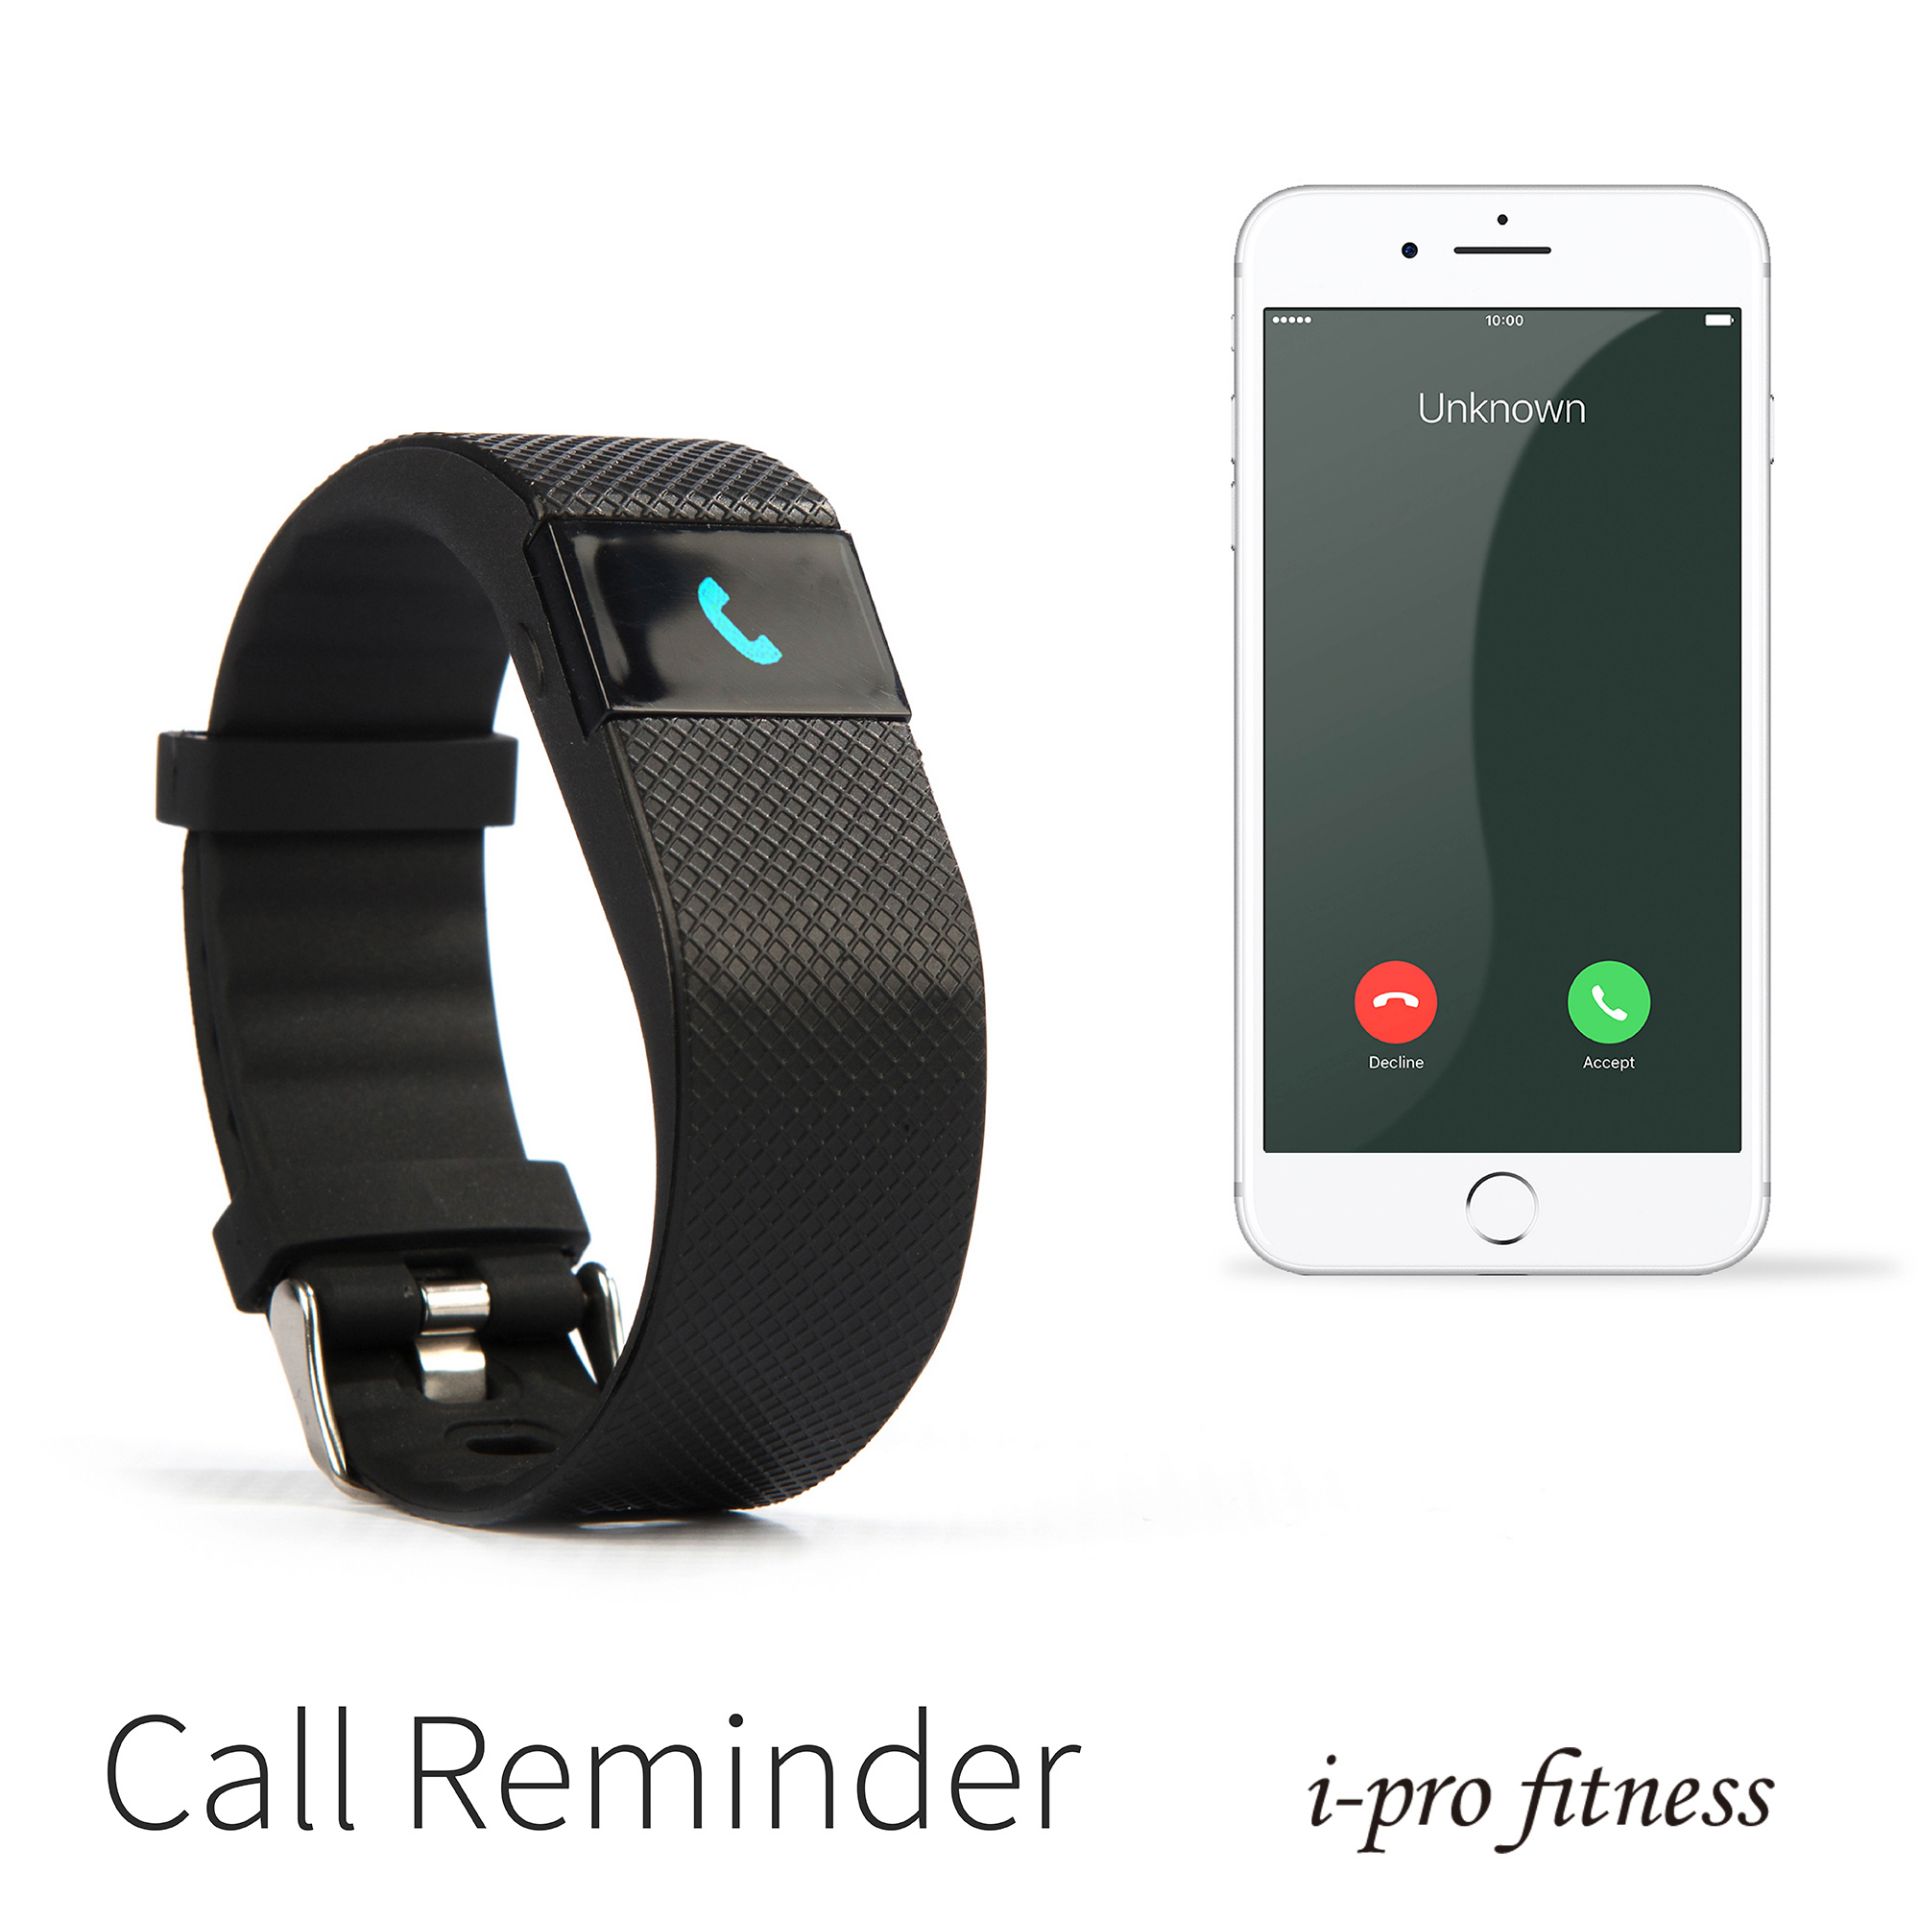 10x Fitness Tracker i-pro fitness, Bluetooth 4.0 Sports Smart Bracelet. - Image 2 of 8